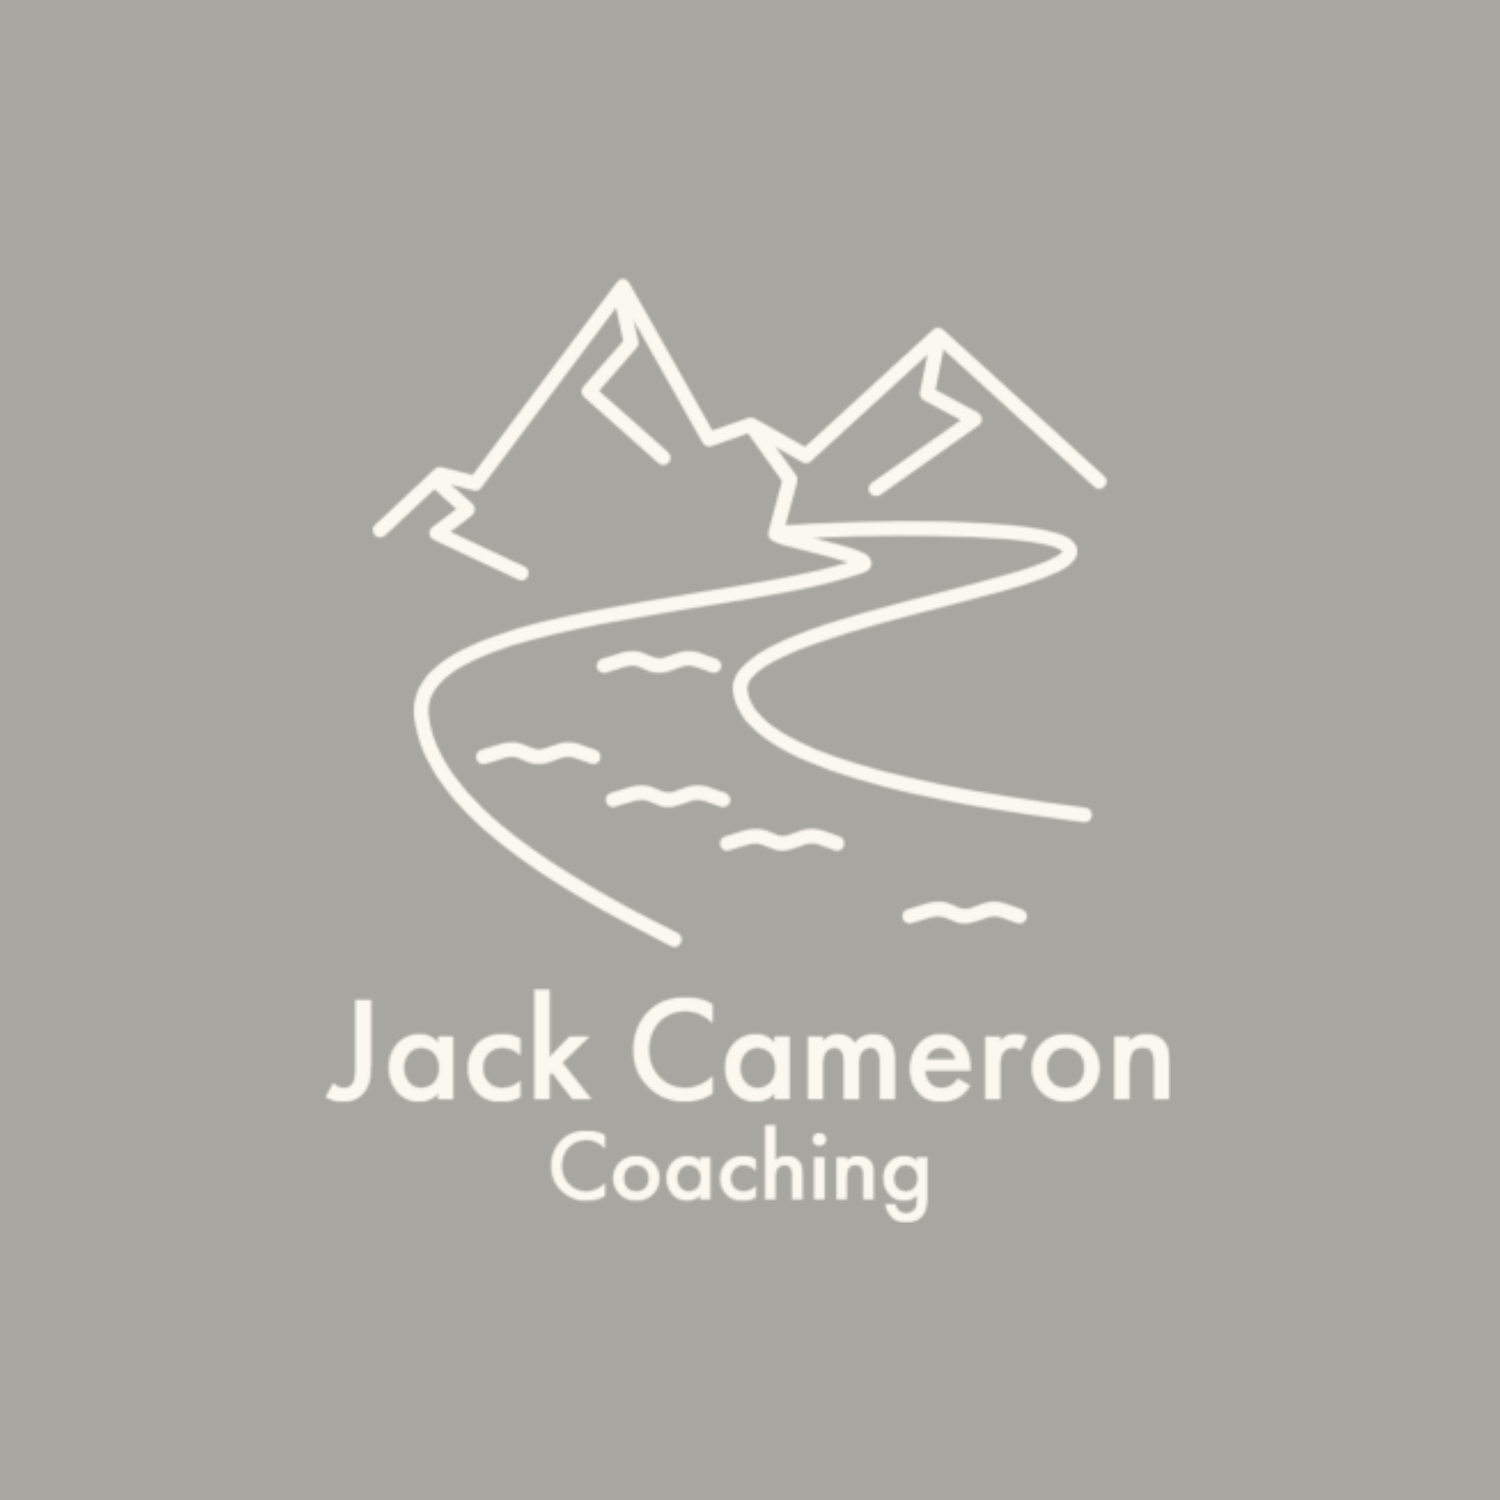 Jack Cameron Coaching